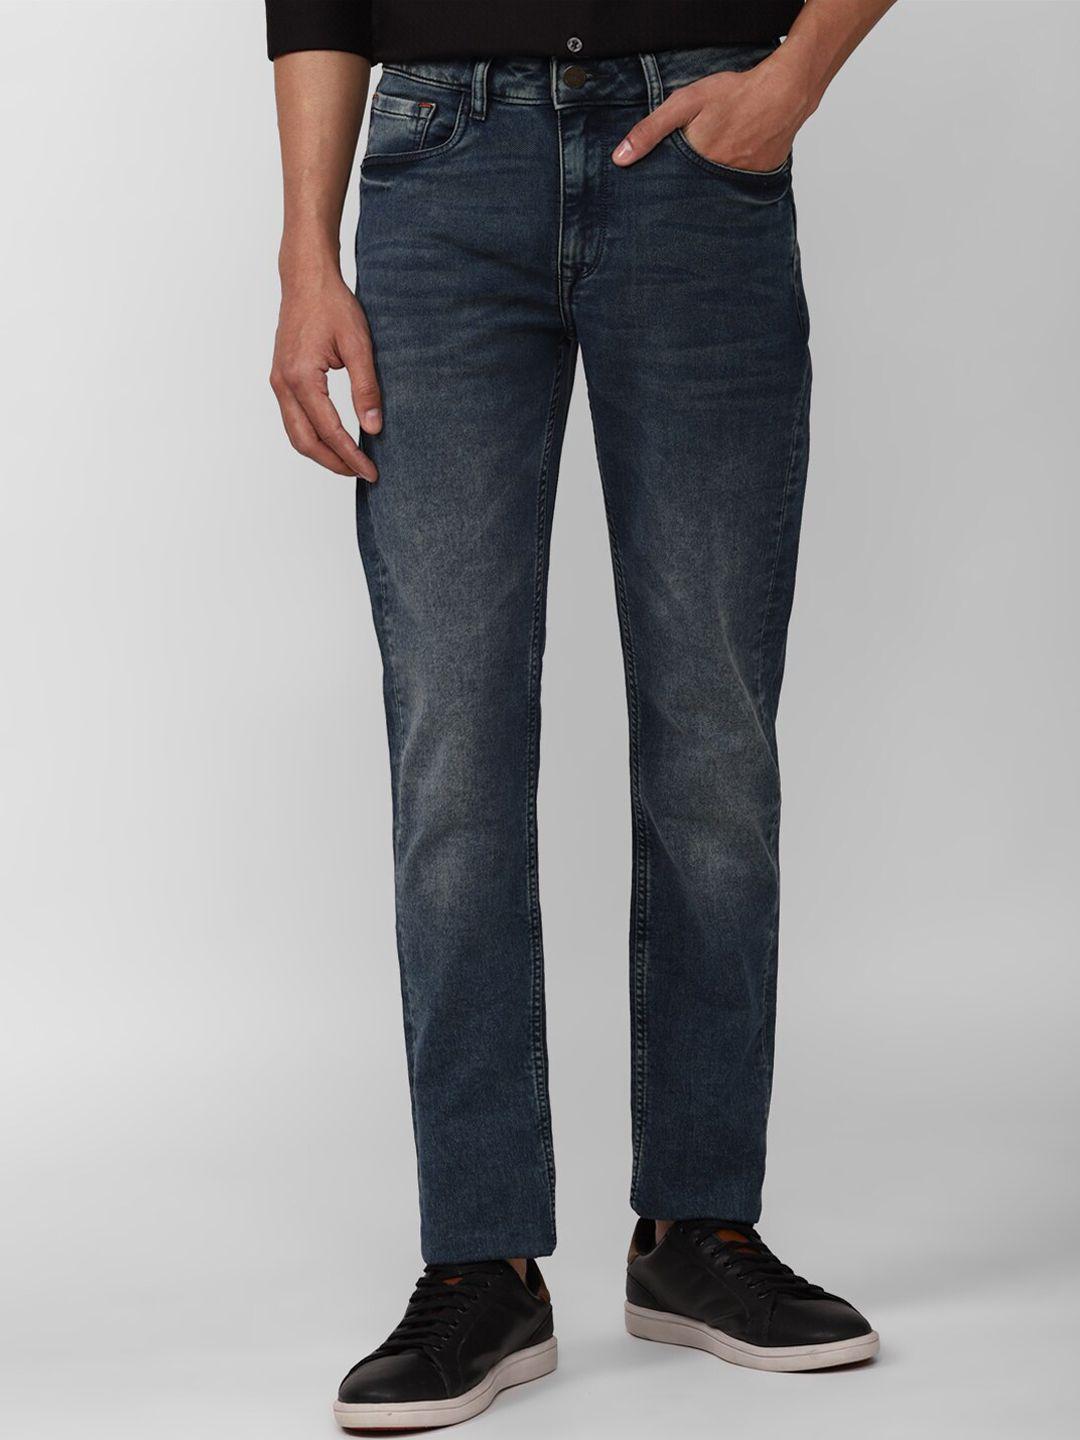 simon-carter-london-men-navy-blue-slim-fit-light-fade-jeans